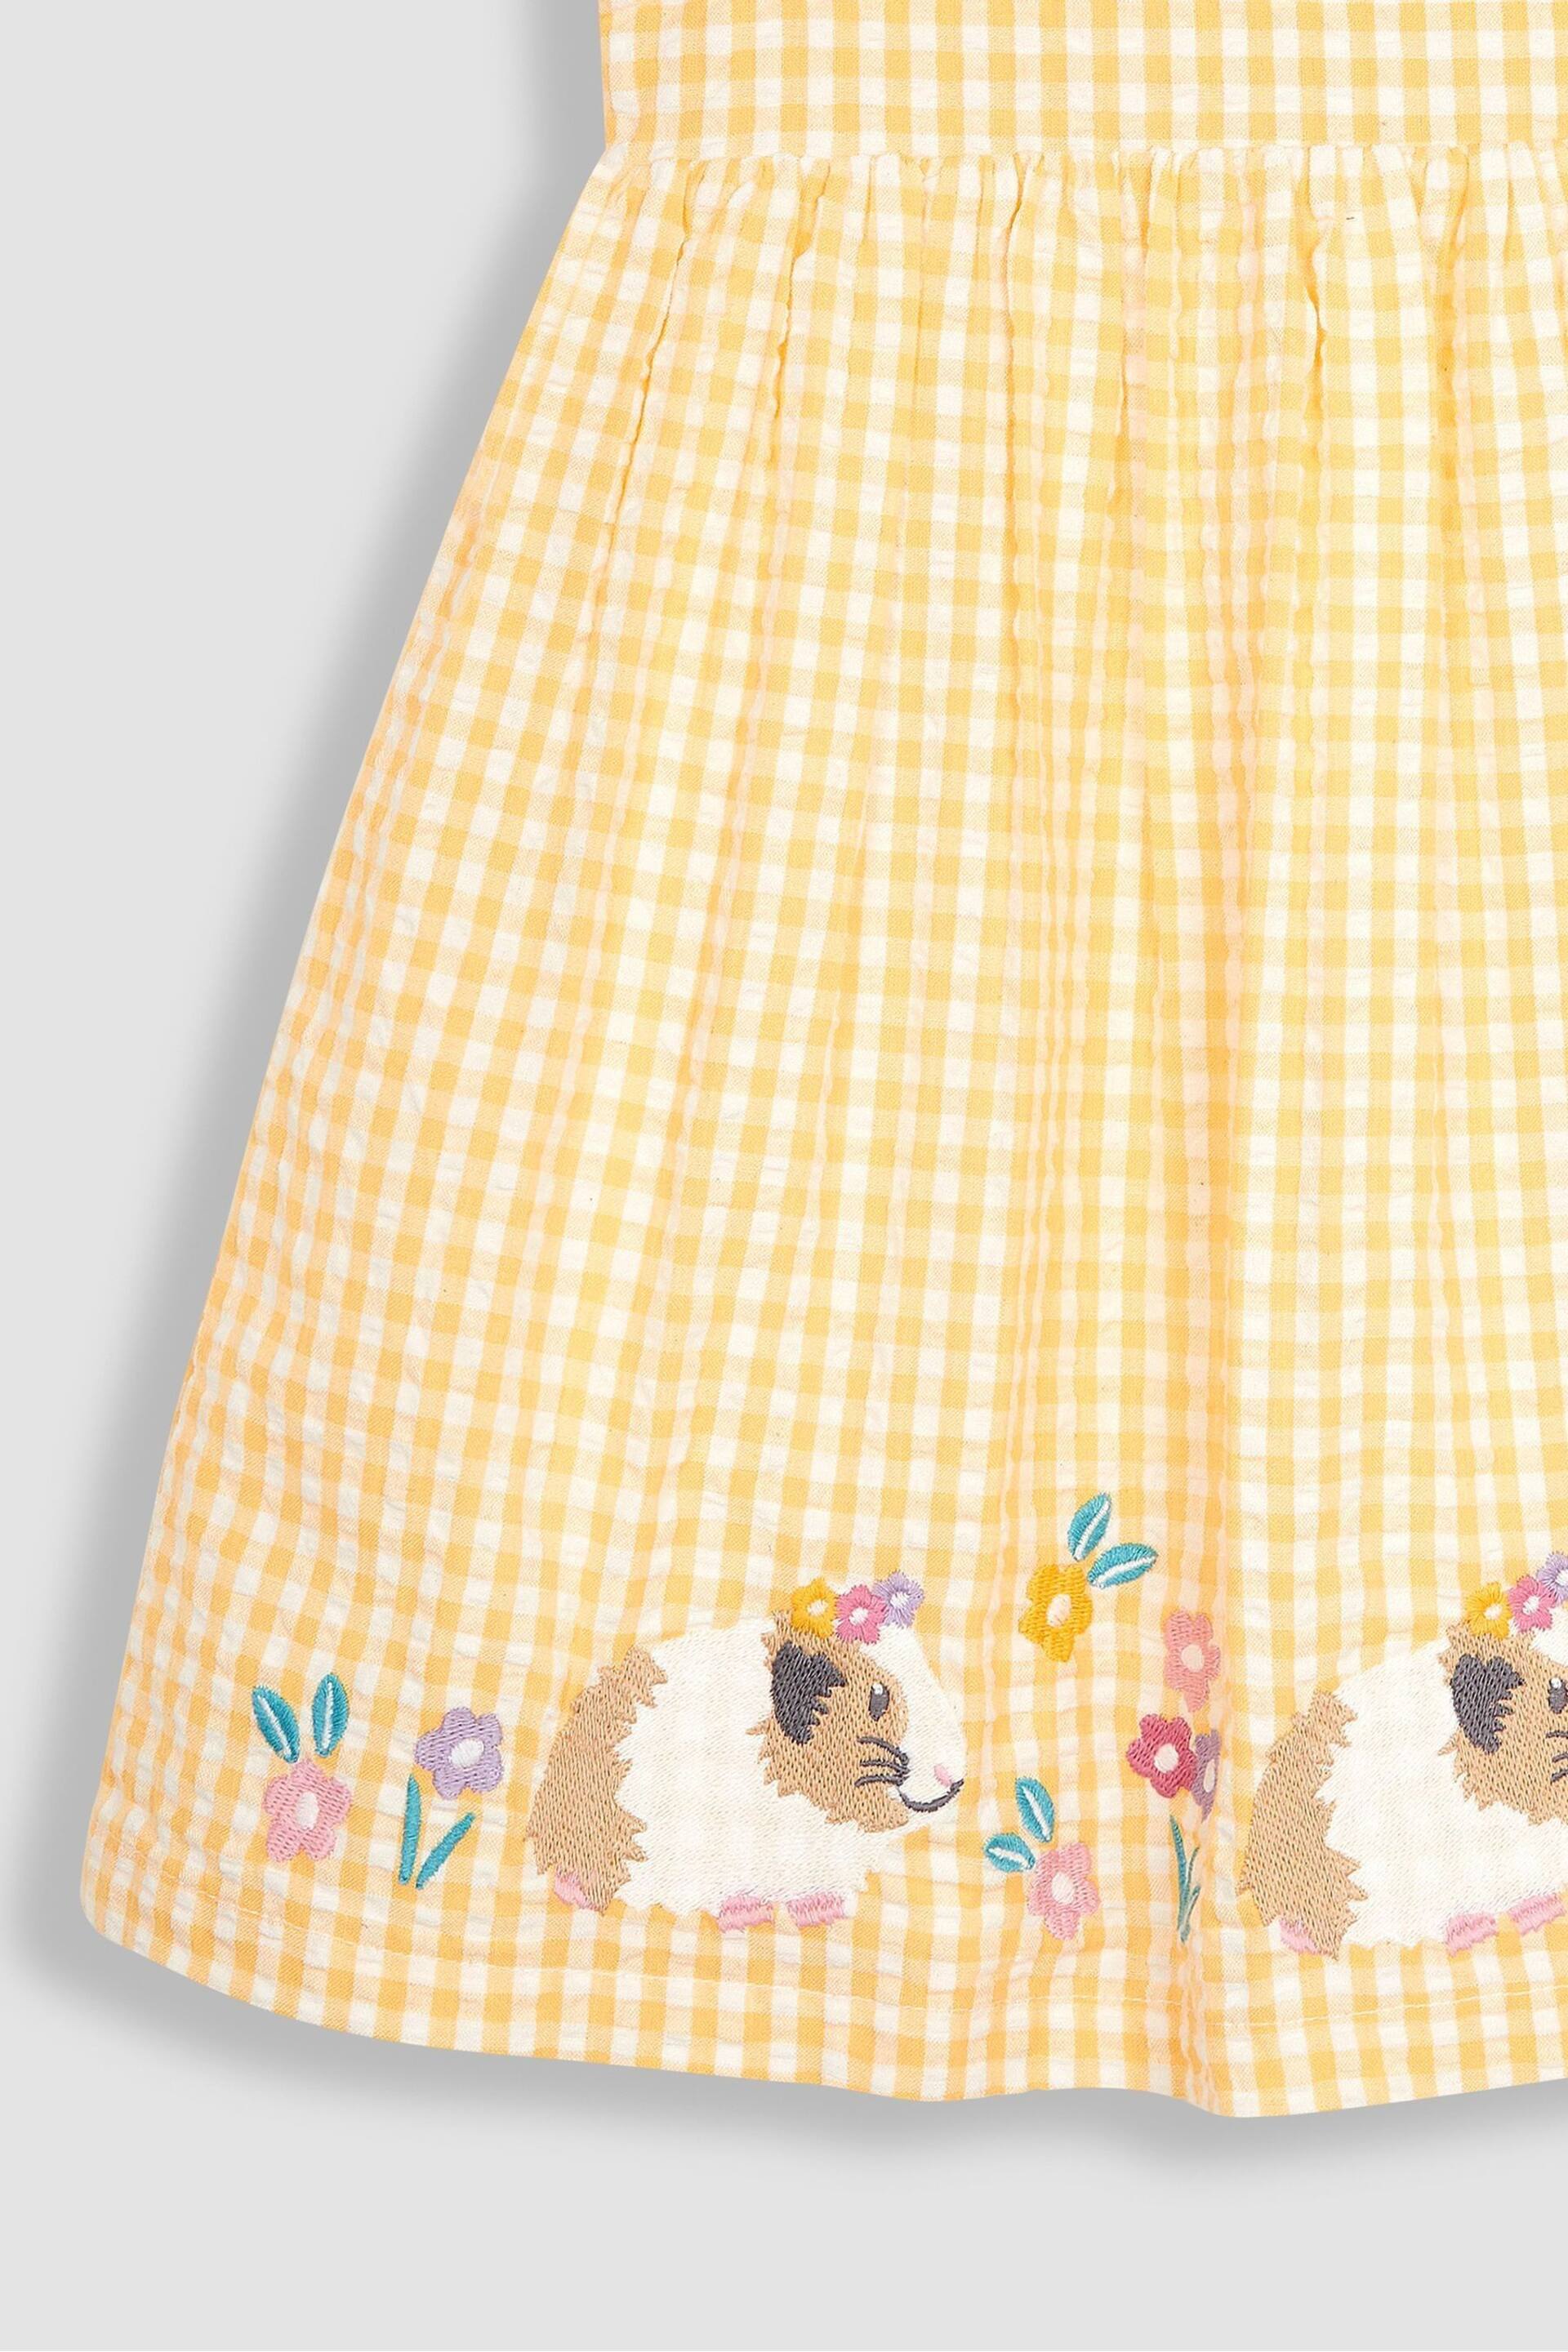 JoJo Maman Bébé Yellow Guinea Pig Appliqué Gingham Summer Dress - Image 3 of 3